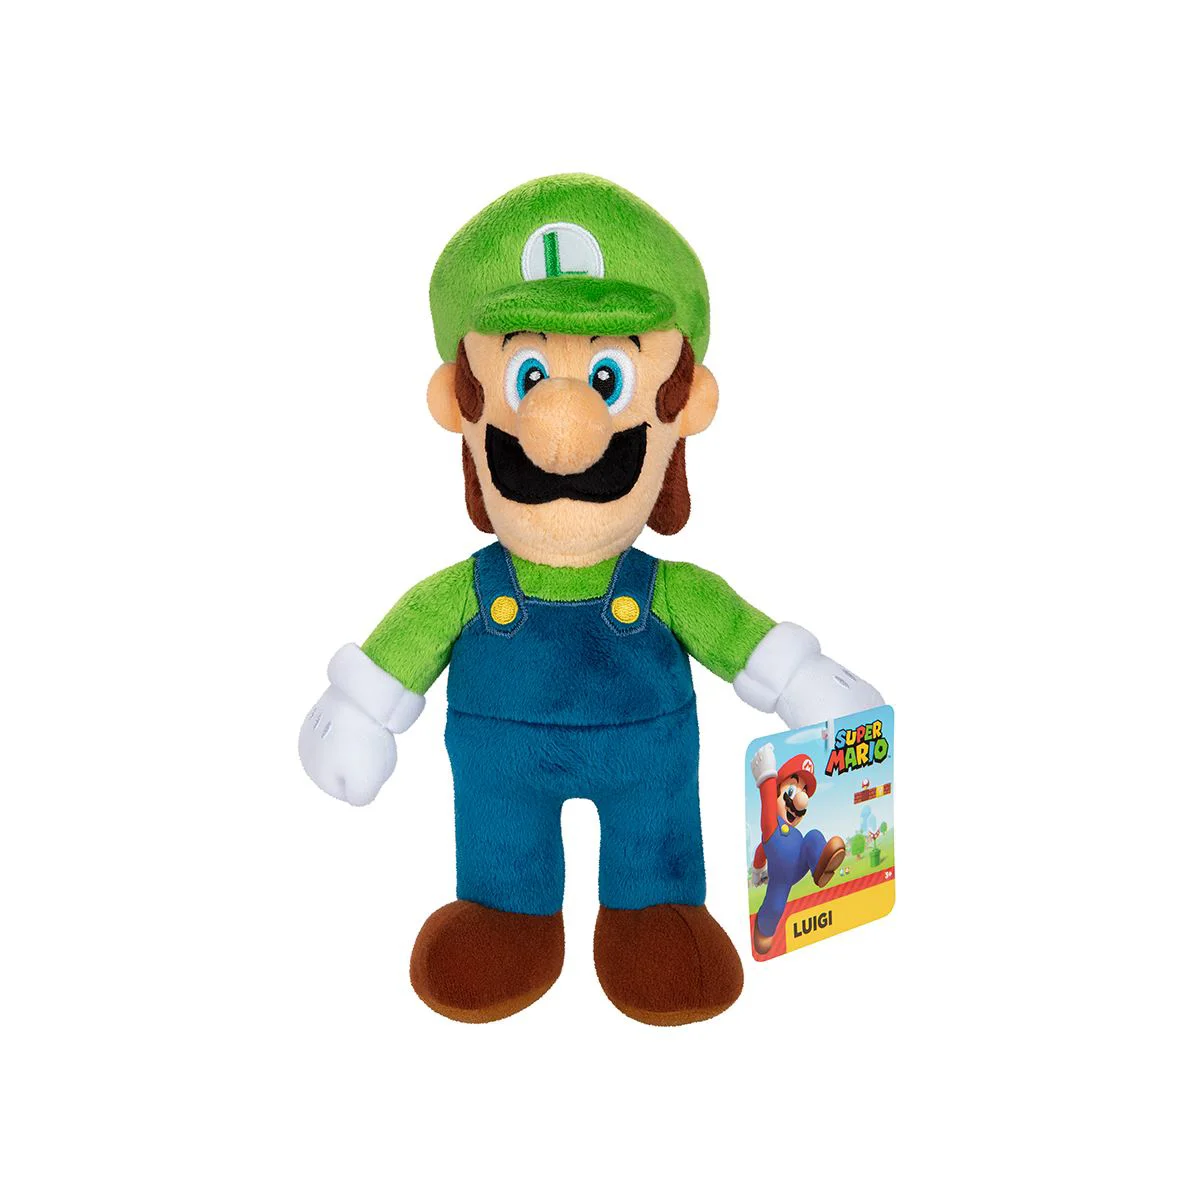 Мягкая игрушка Super Mario Луиджи, 23 см